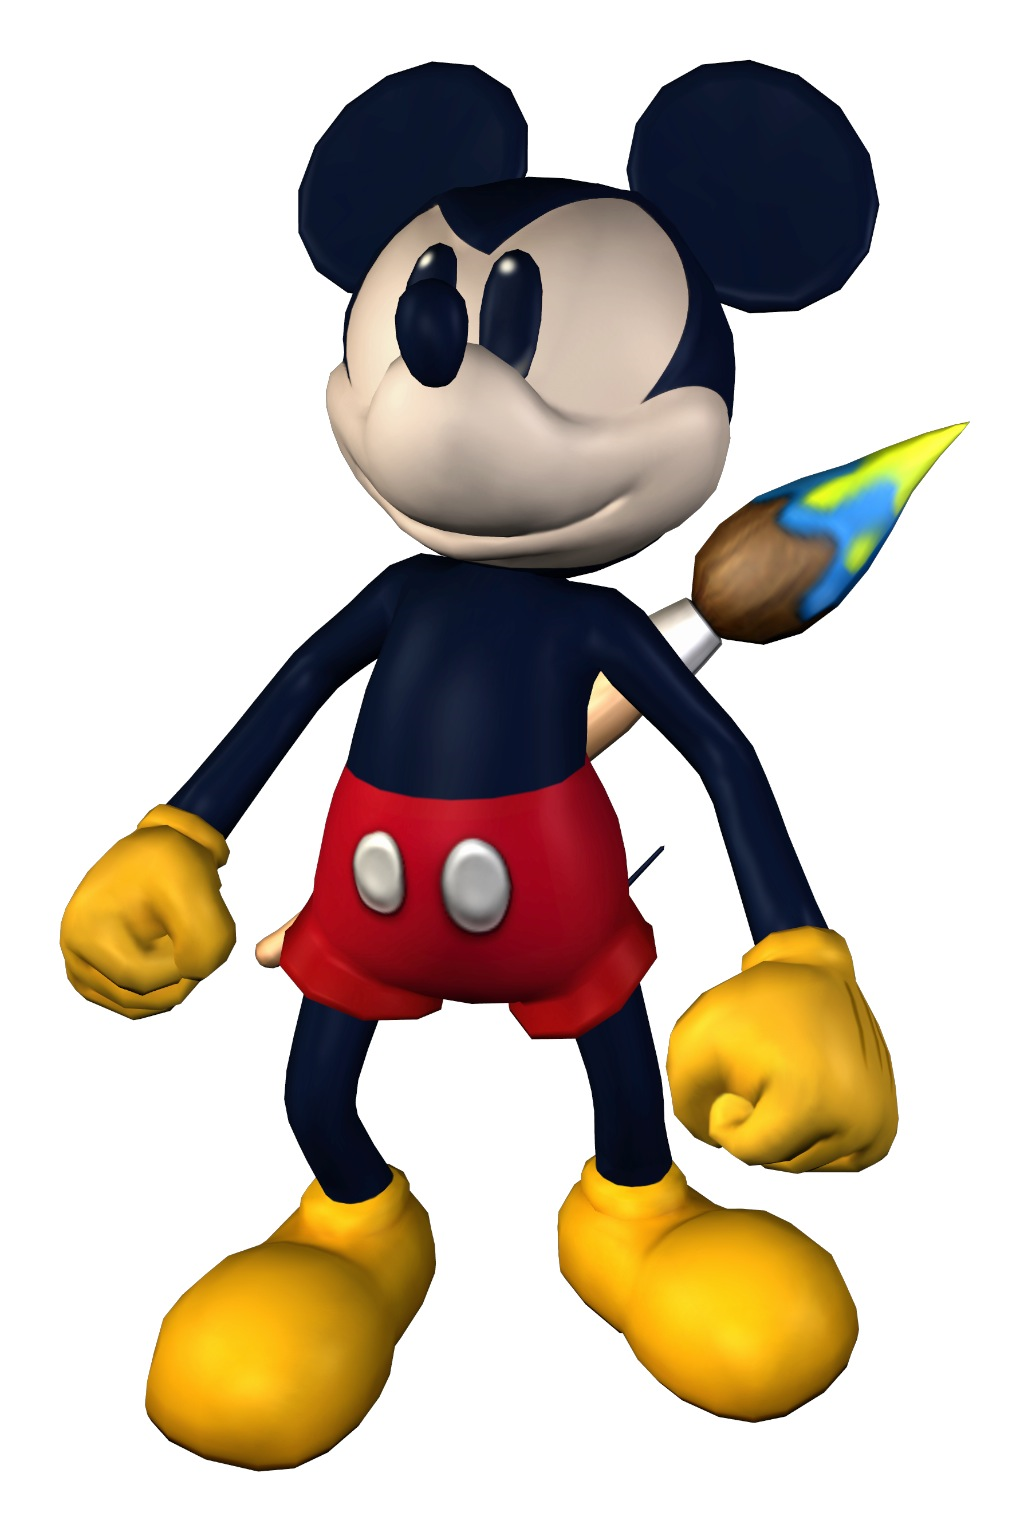 Epic Mickey Media Introduces Oswald The Rabbit - Siliconera